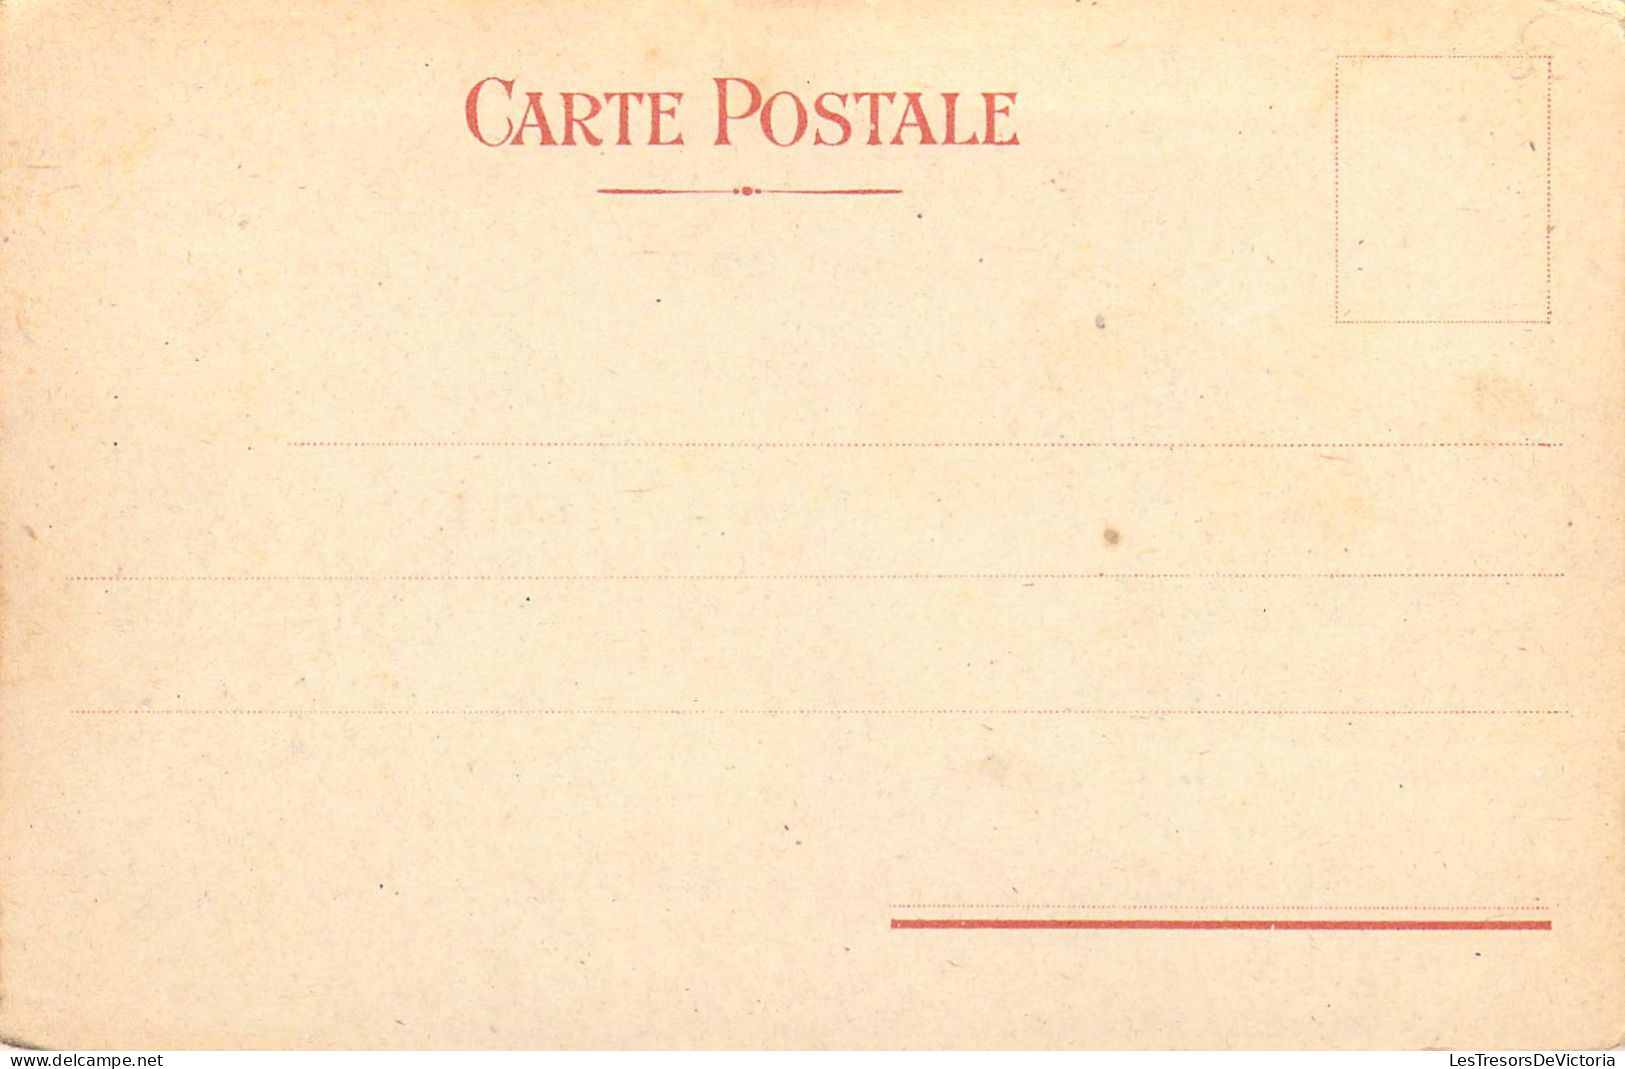 ITALIE - Napoli - Porte Capuana - Carte Postale Ancienne - Napoli